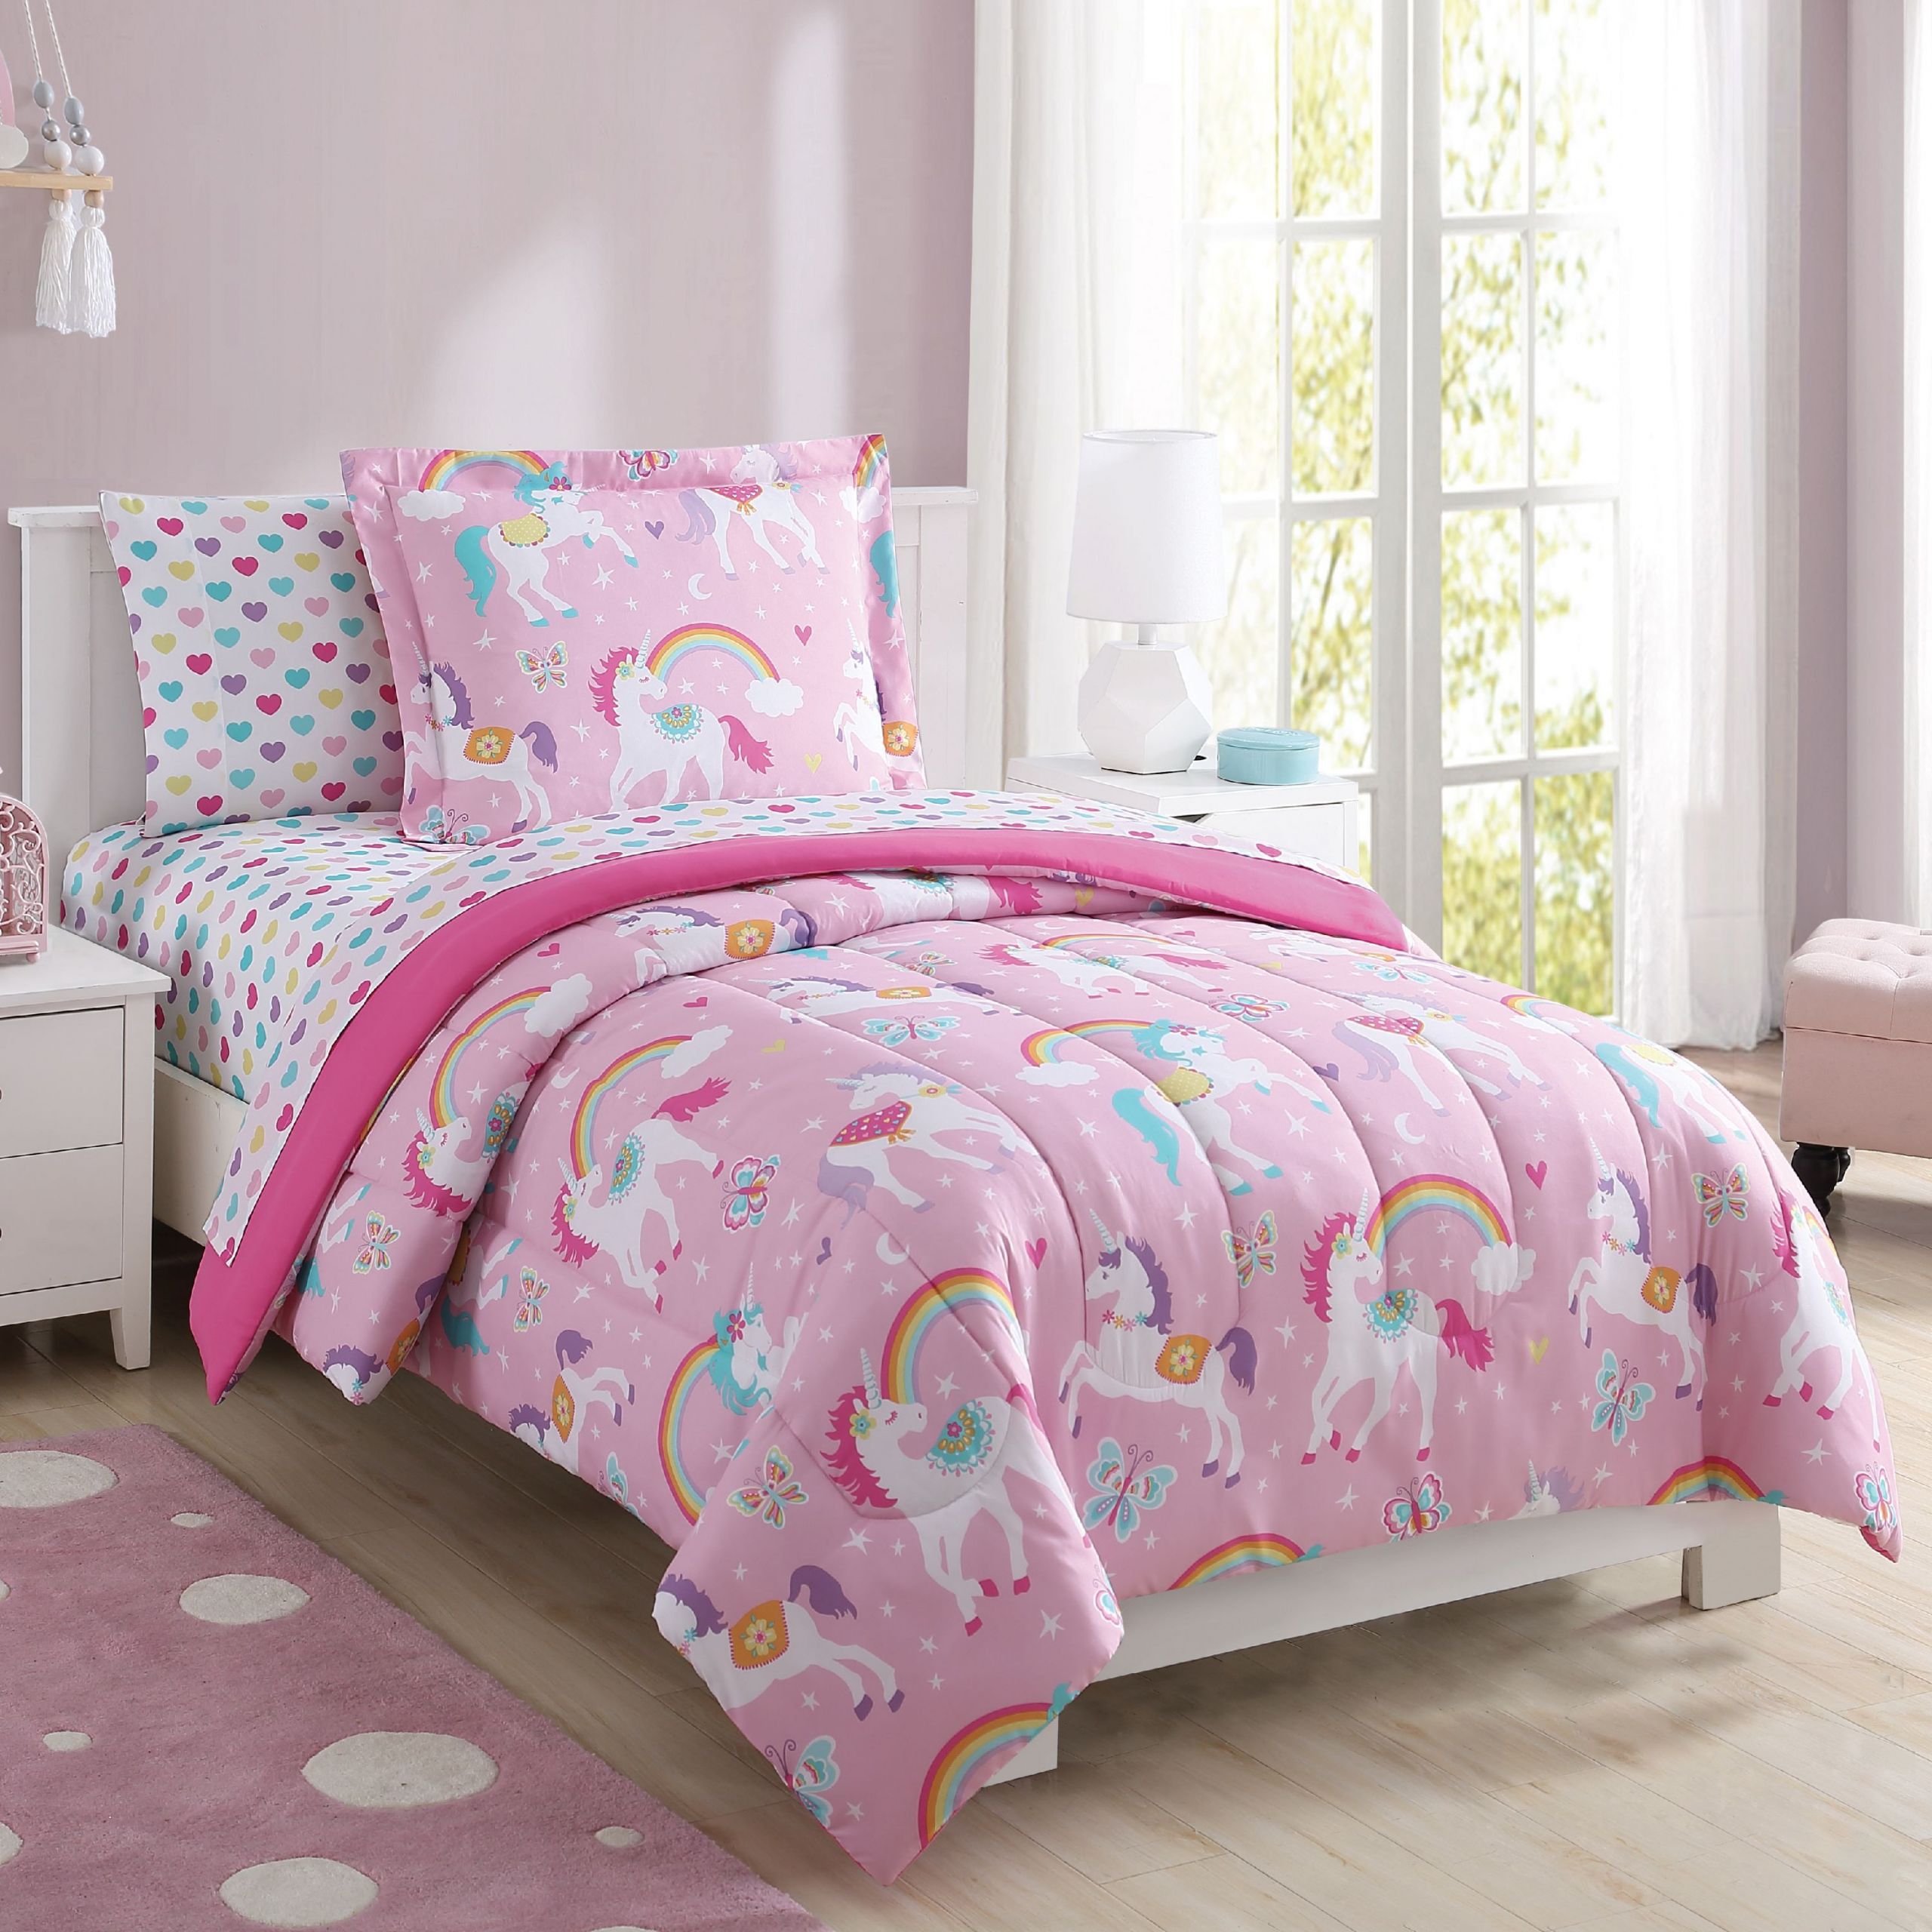 Walmart Bedroom Sets For Kids
 Mainstays Kids Rainbow Unicorn Bed in a Bag plete